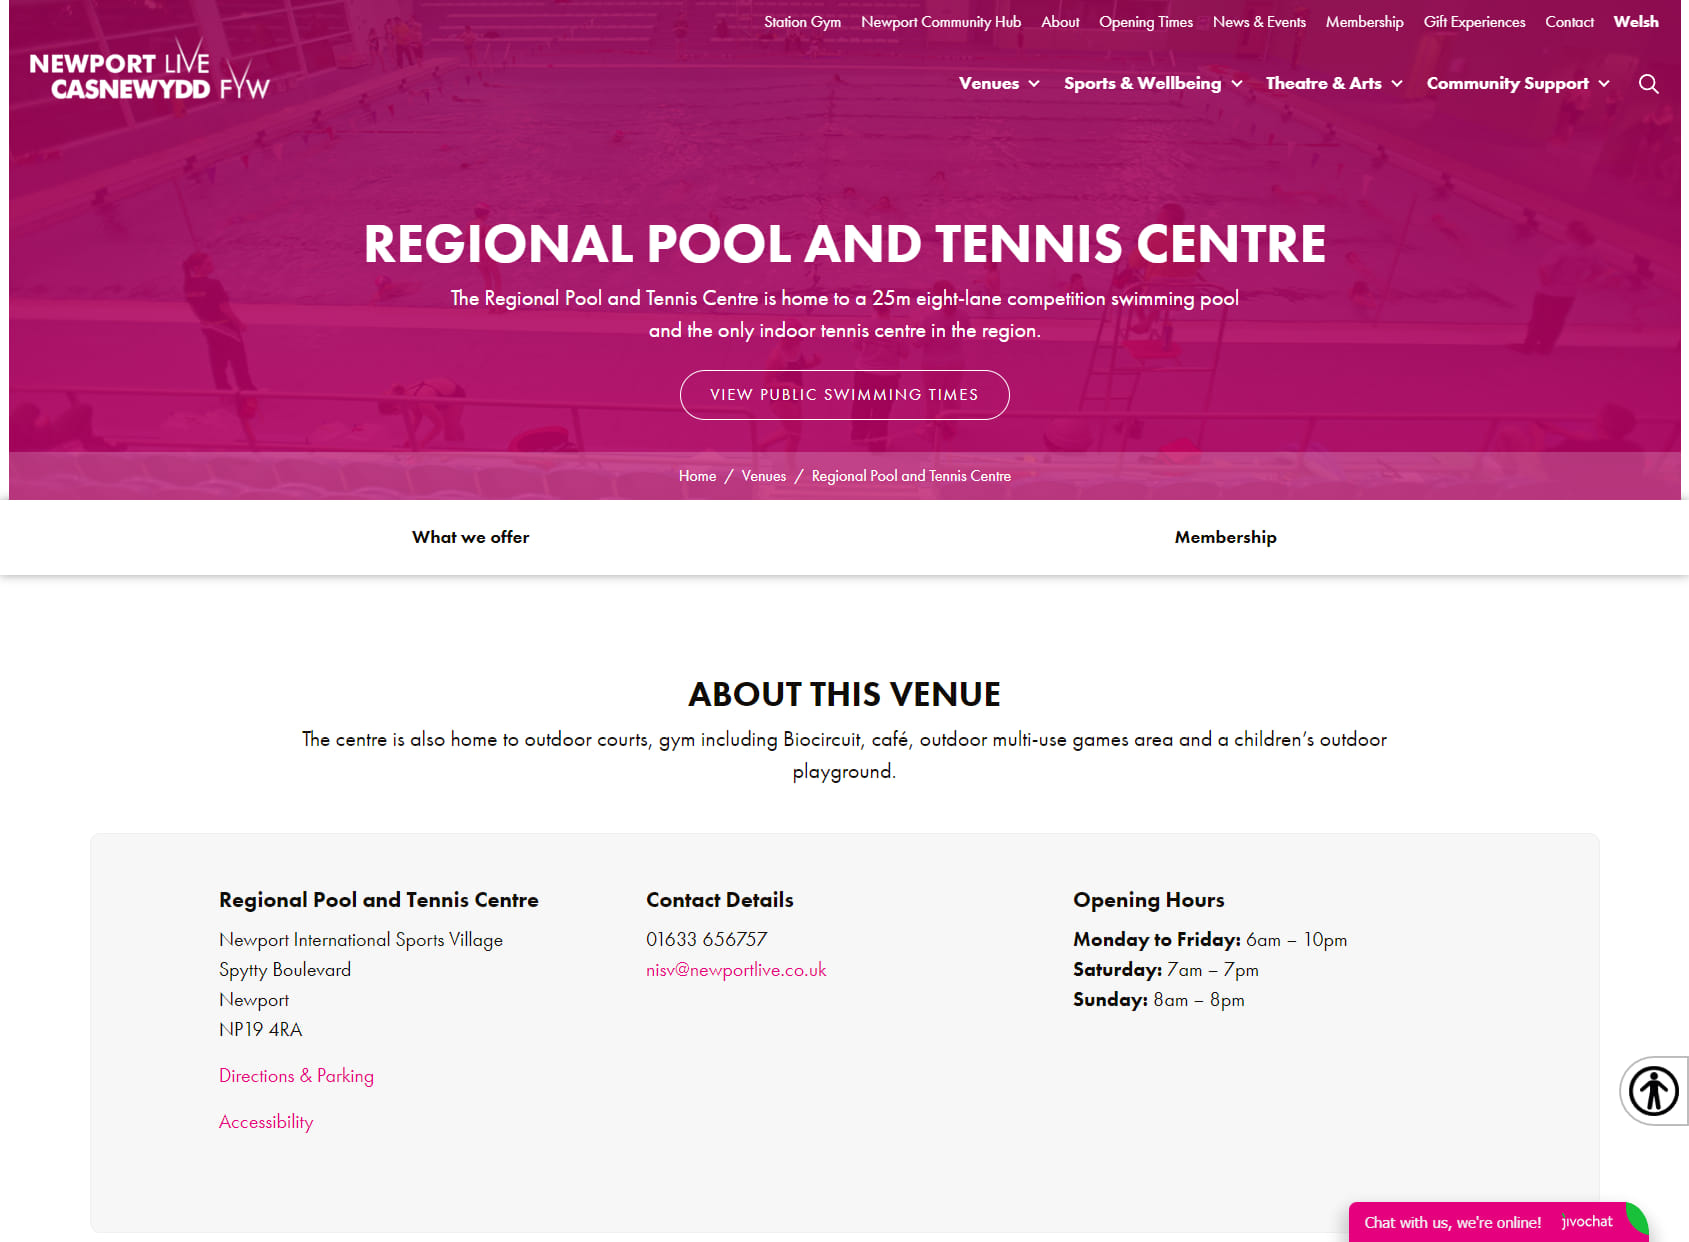 Newport International Sports Village Pool and Tennis